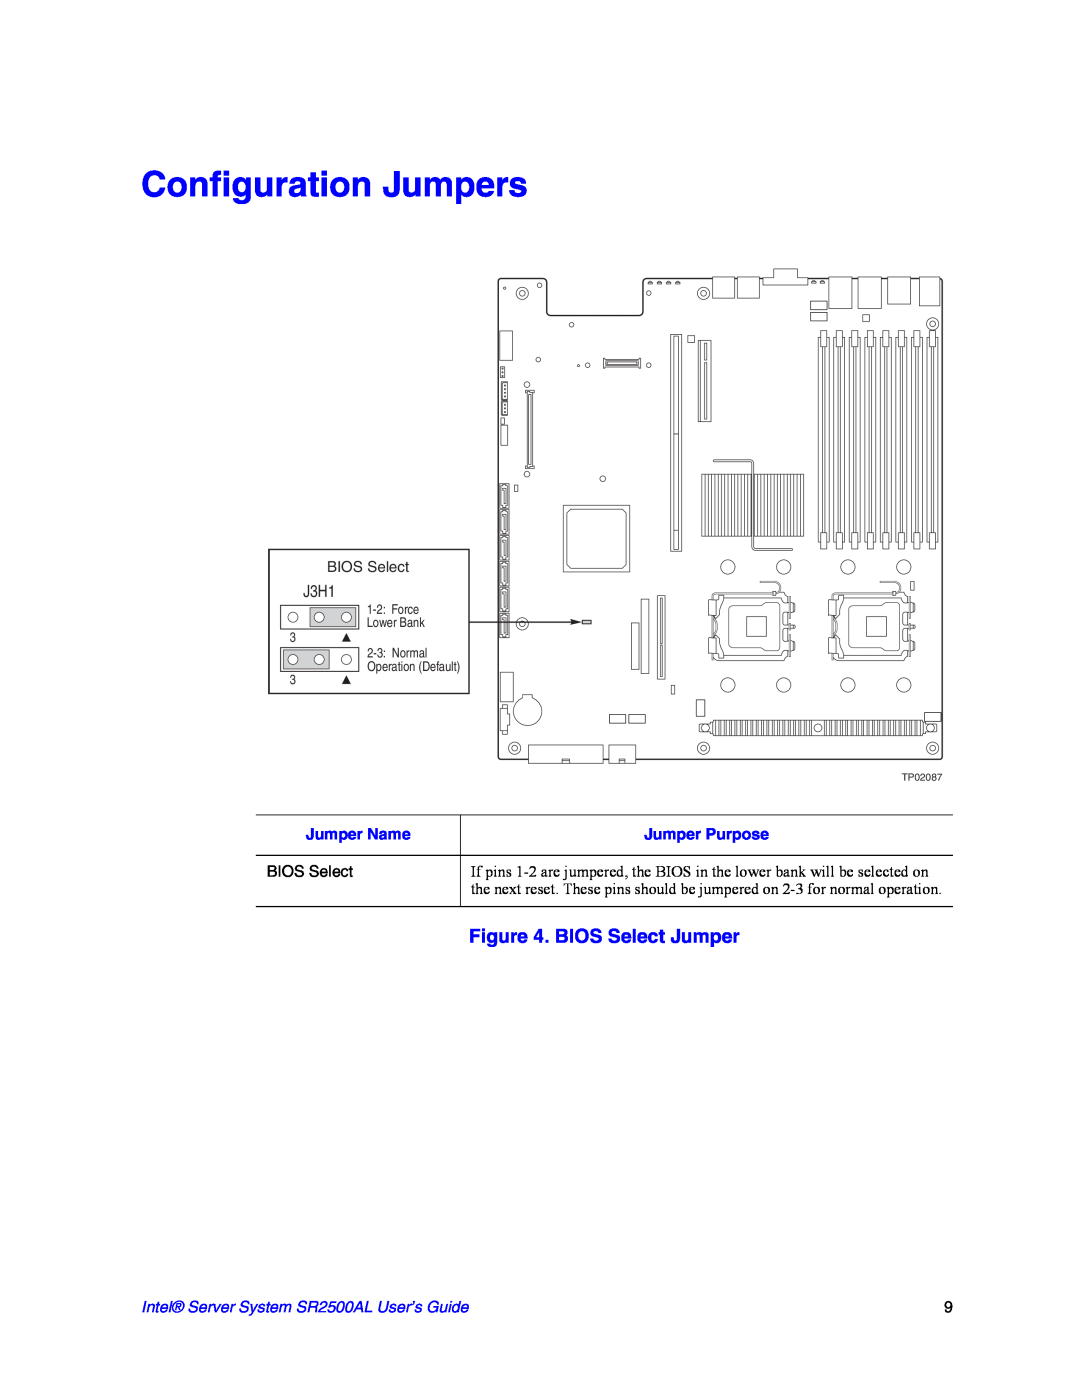 Intel manual Configuration Jumpers, BIOS Select Jumper, J3H1, Intel Server System SR2500AL User’s Guide 